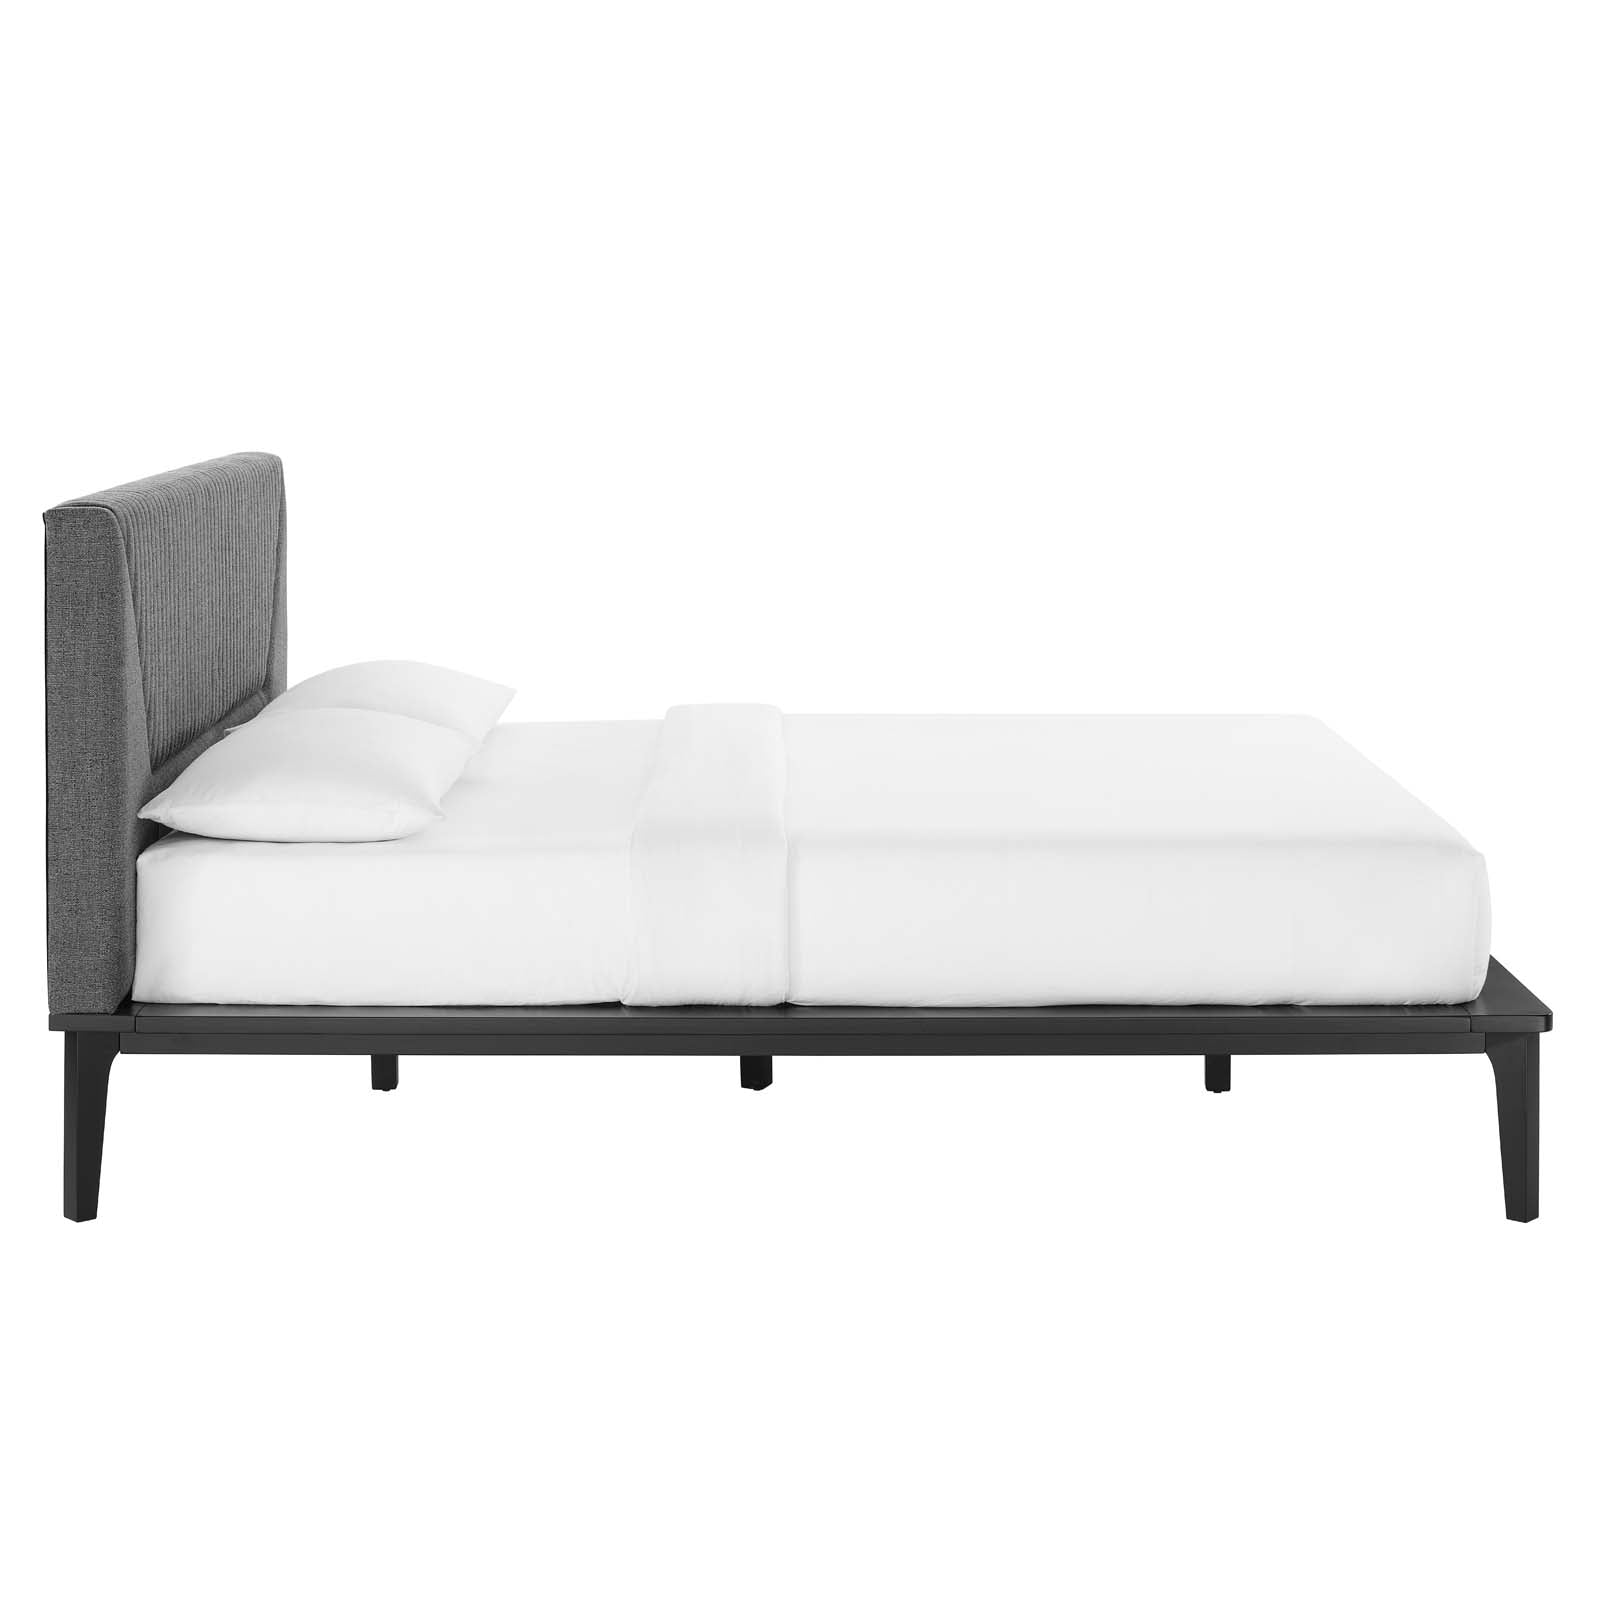 Modway Beds - Dakota Upholstered Queen Platform Bed Black Gray